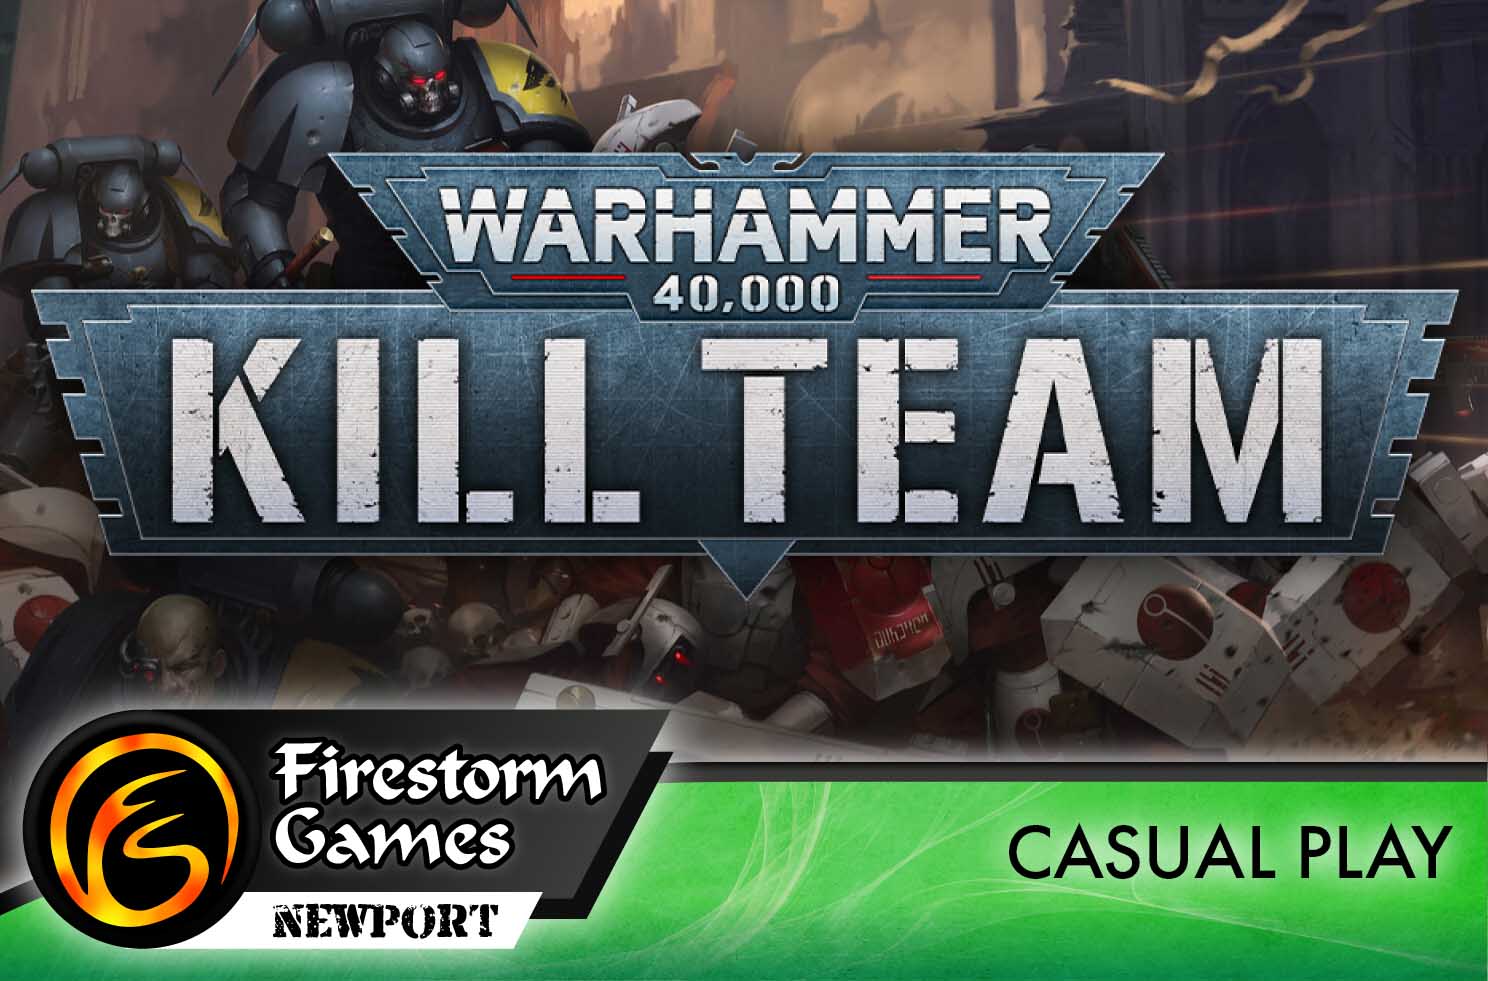 Kill Team Casual Play